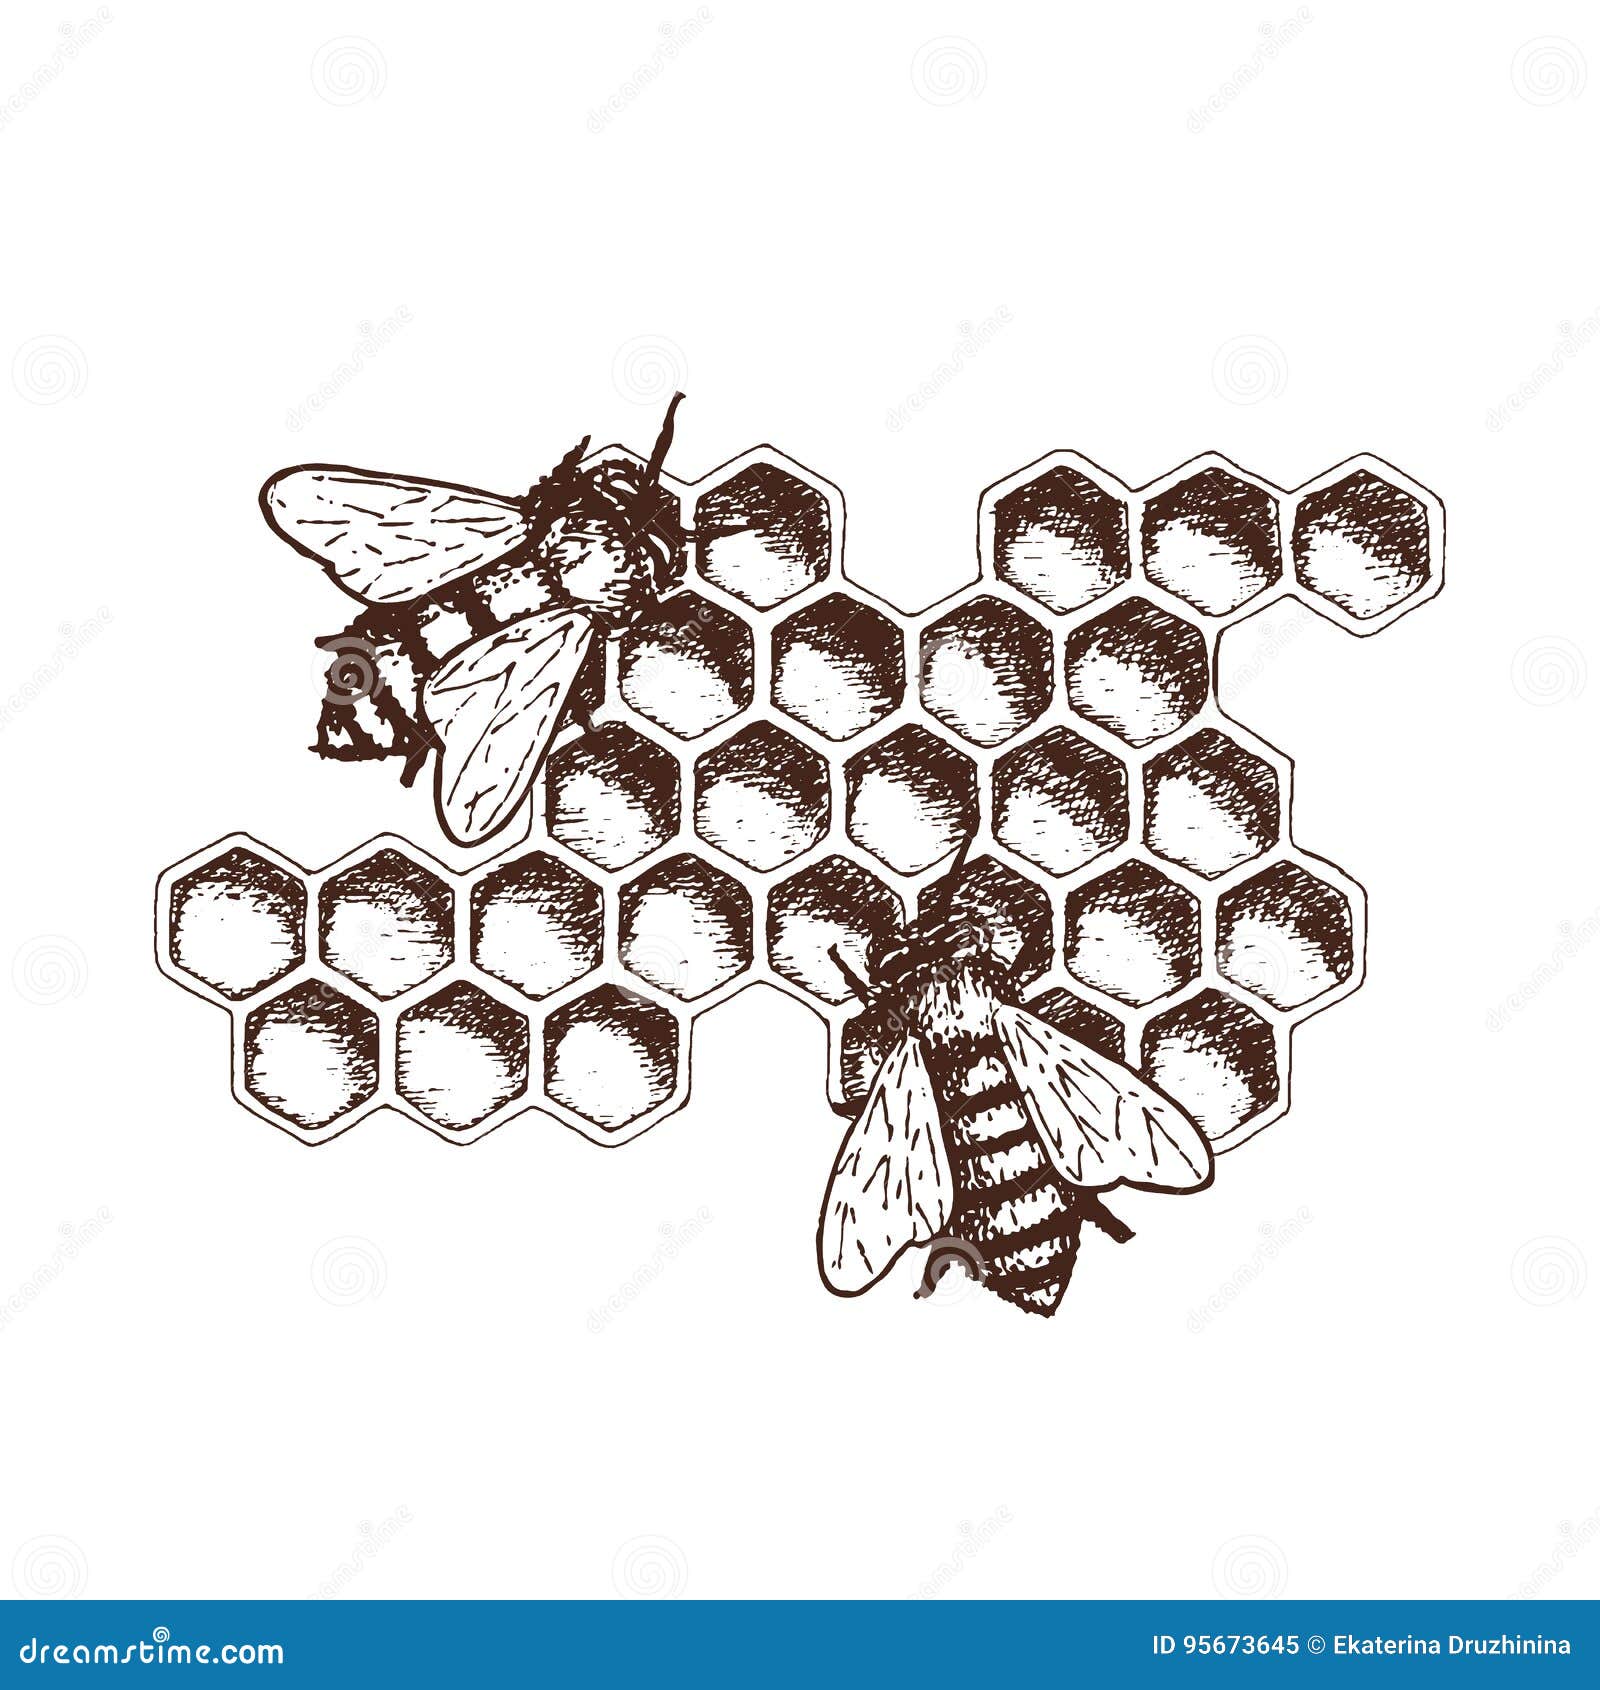 Free Vector  Hand drawn beehive drawing illustration